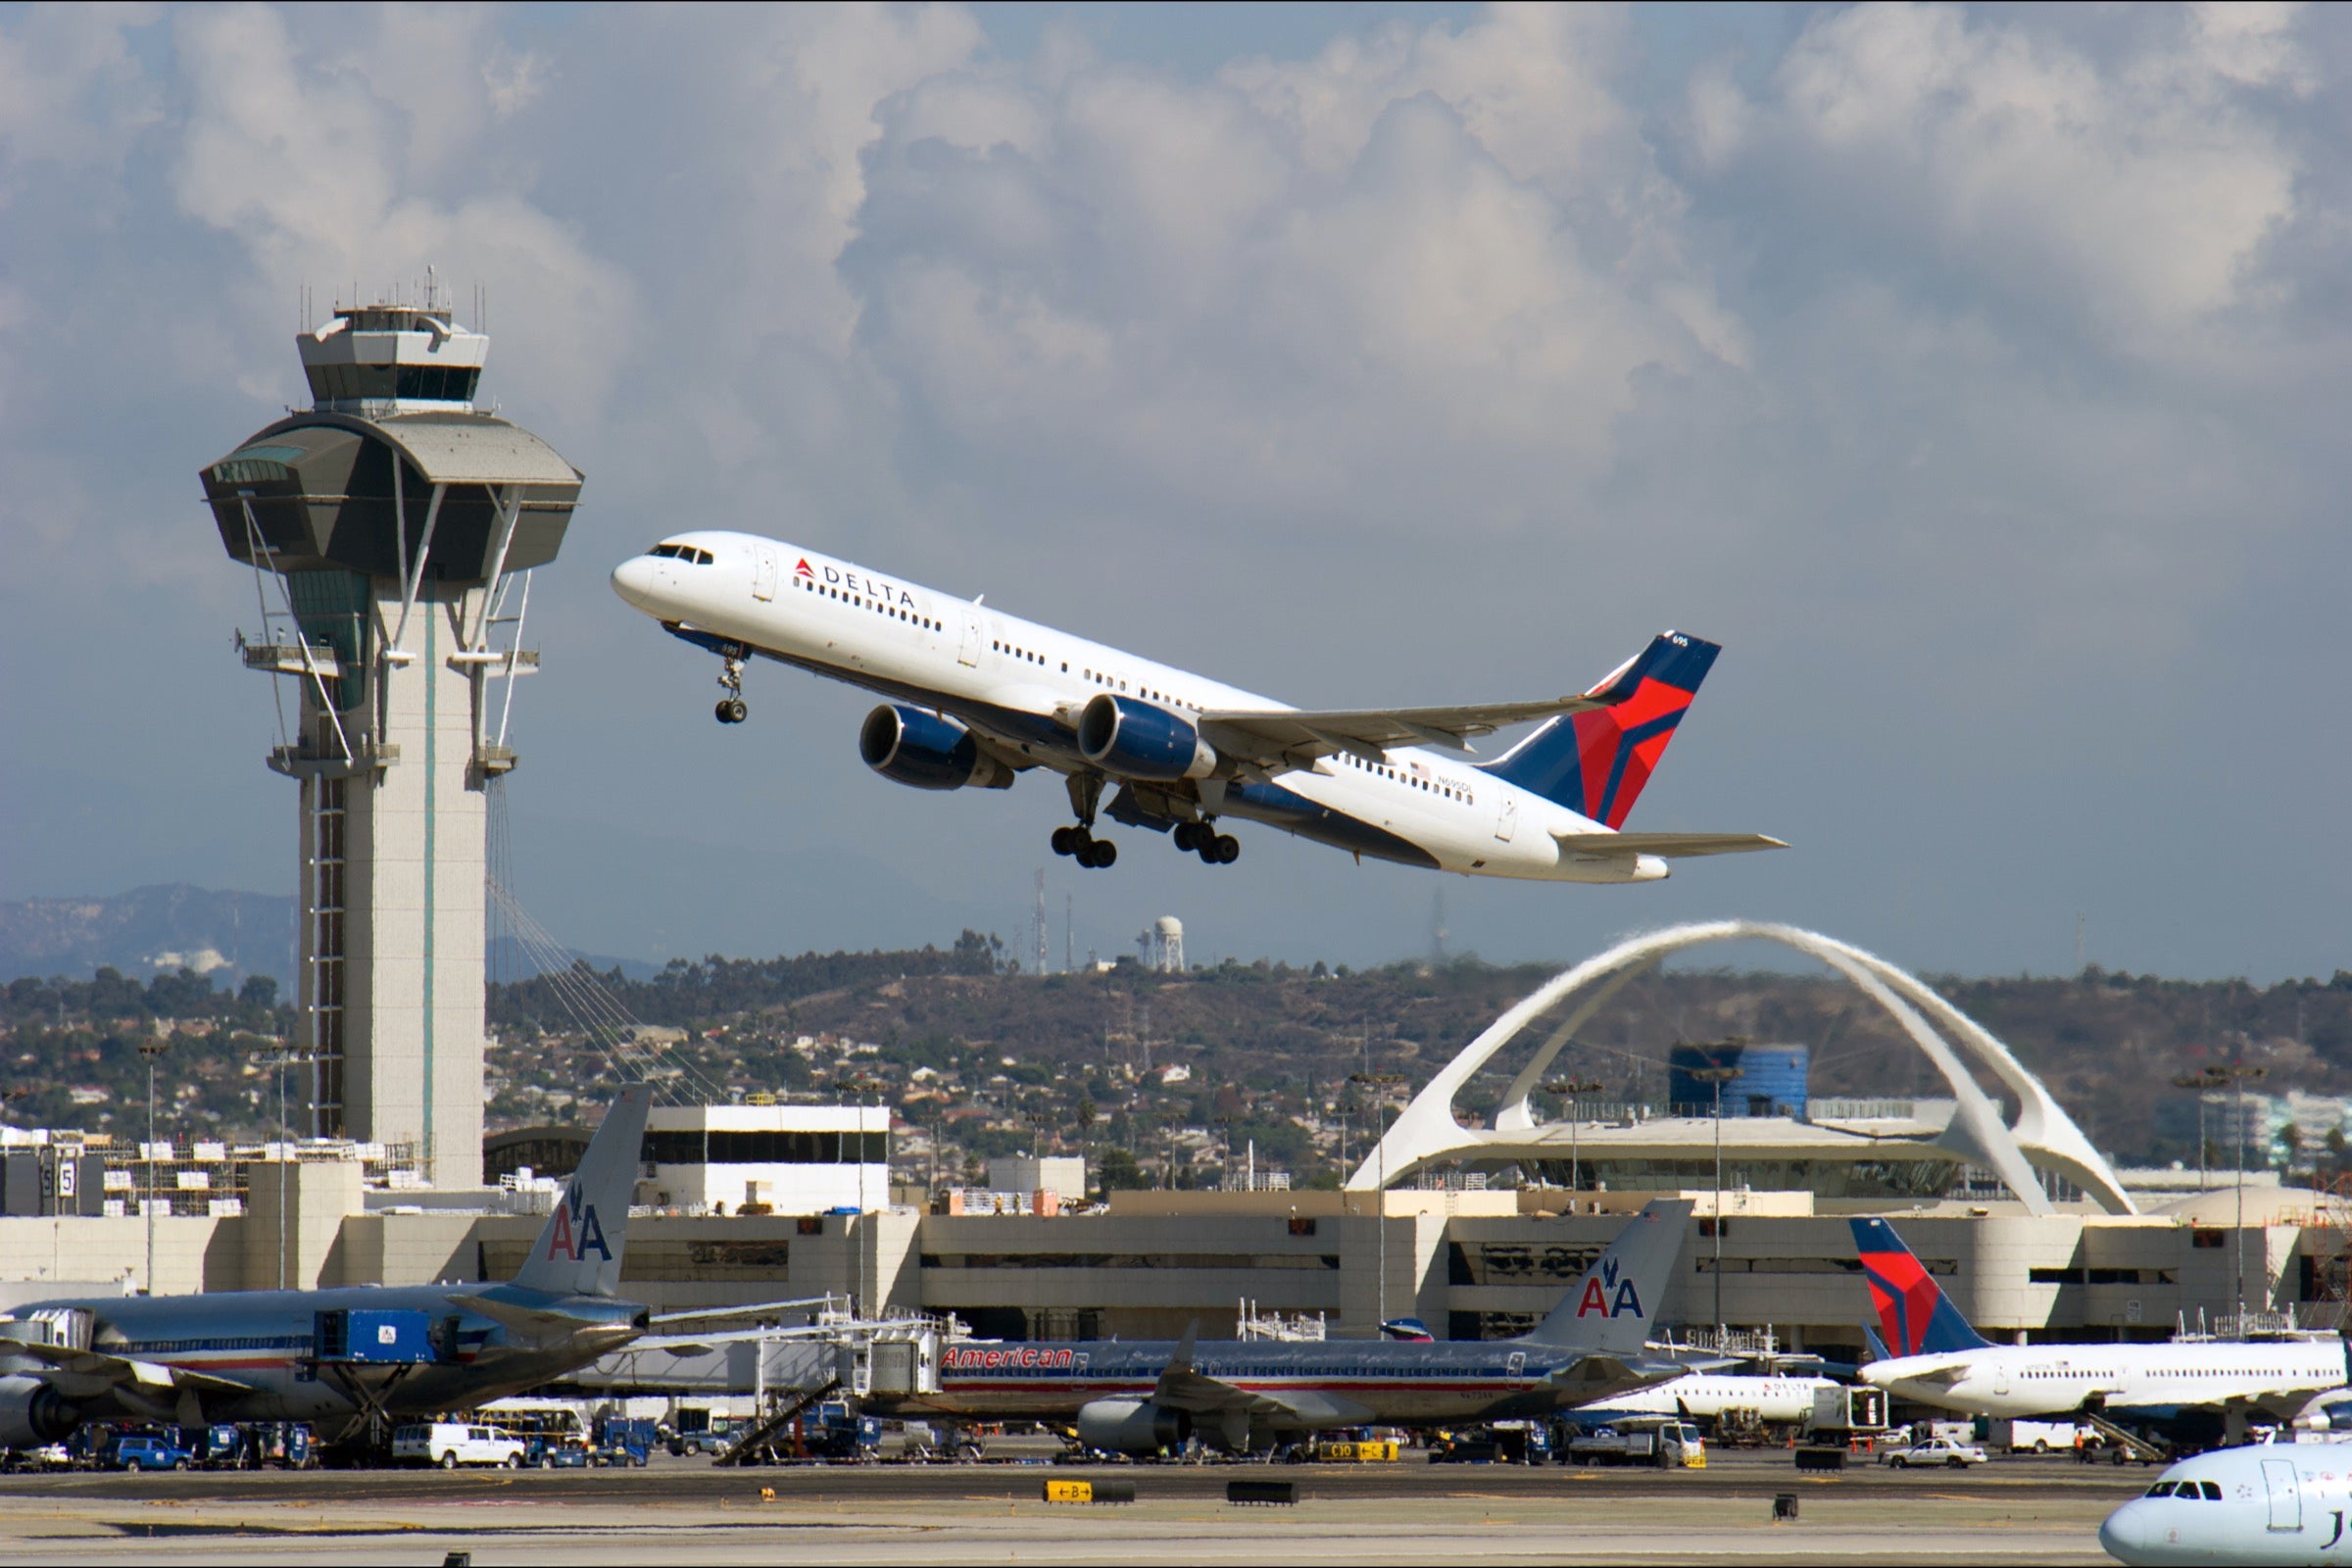 Delta 757 departing LAX airport